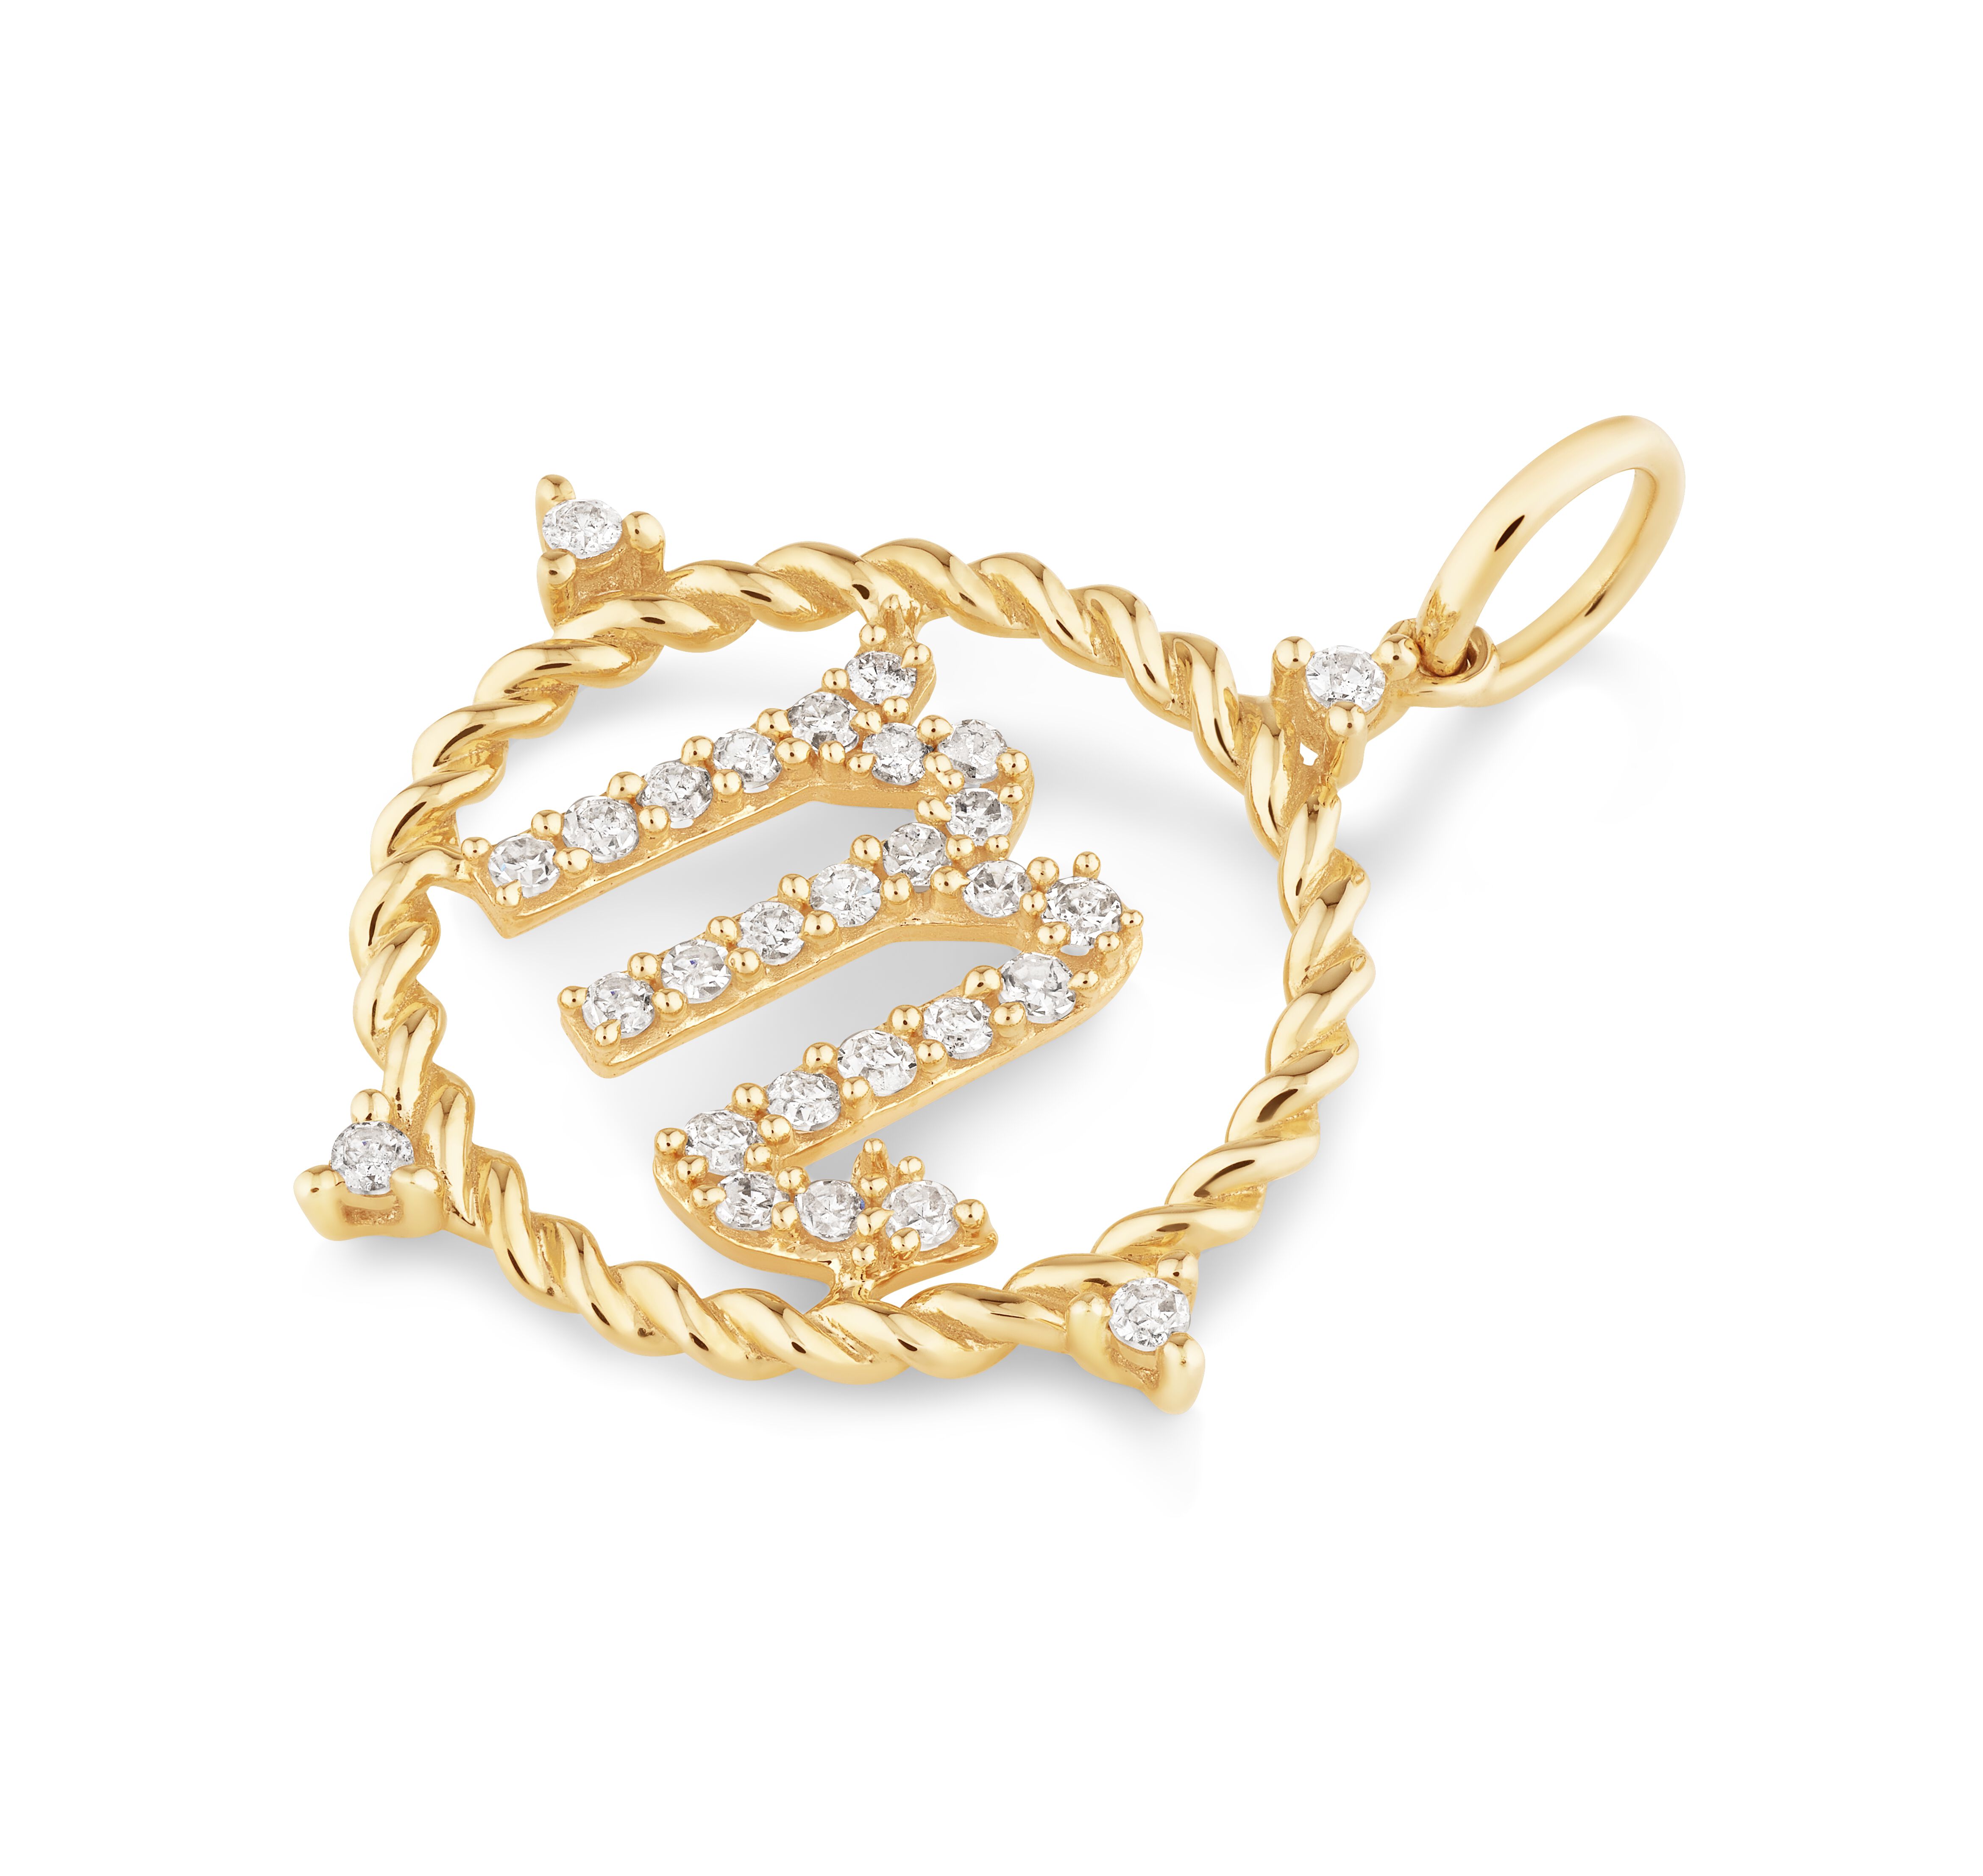 Scorpio Zodiac Pendant with 0.20 Carat TW of Diamonds in 10kt Yellow Gold